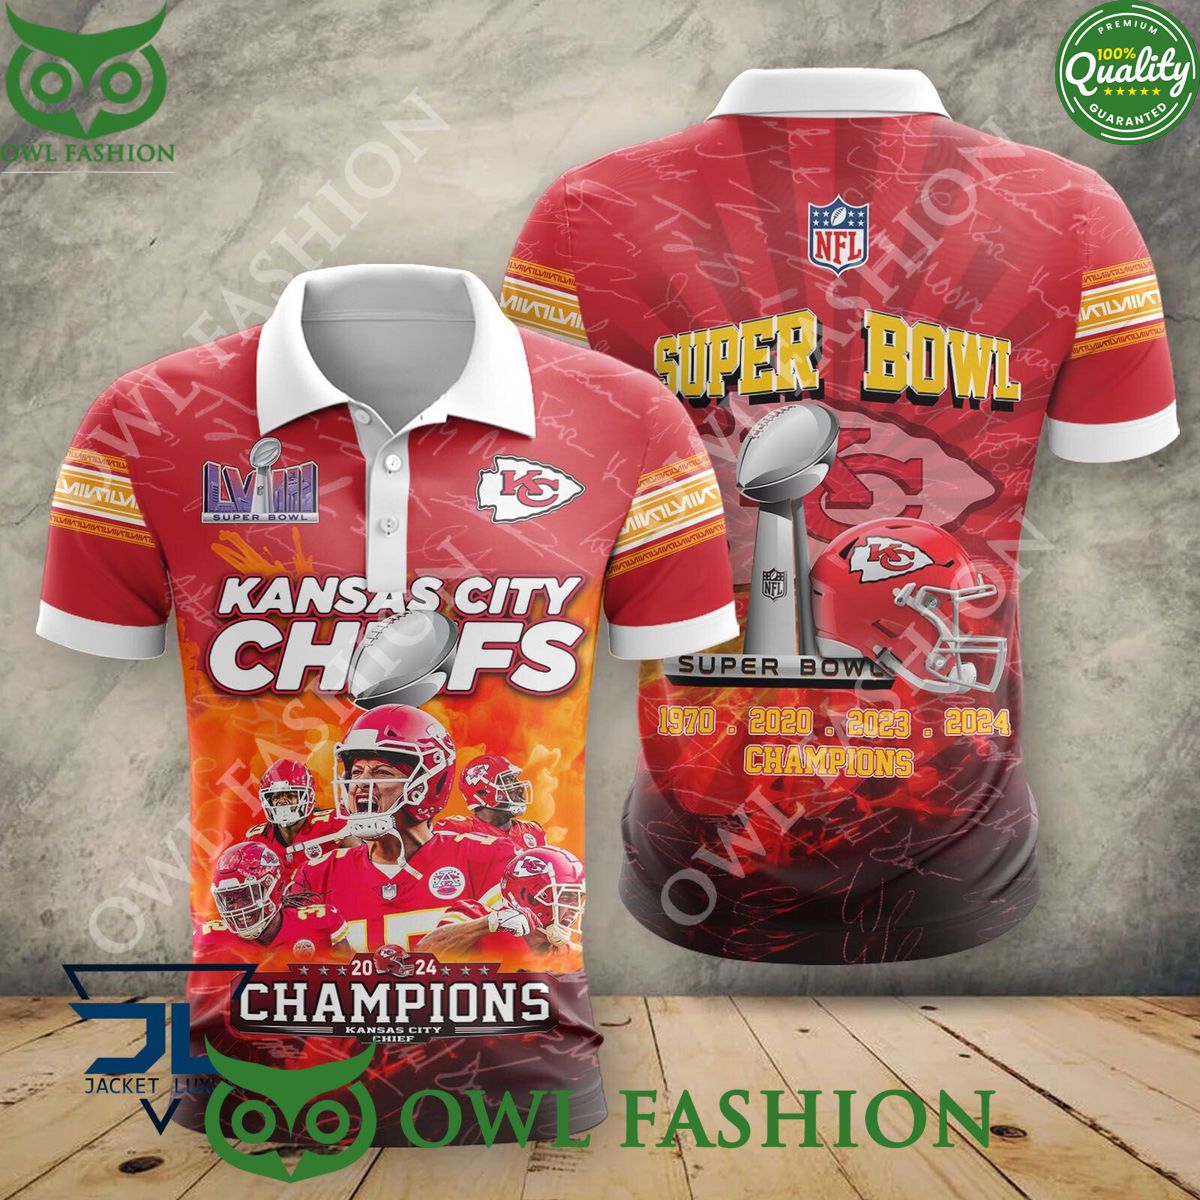 Super Bowl NFL LVIII Kansas City Chiefs Champions 4 years 1970 2020 2023 2024 polo shirt